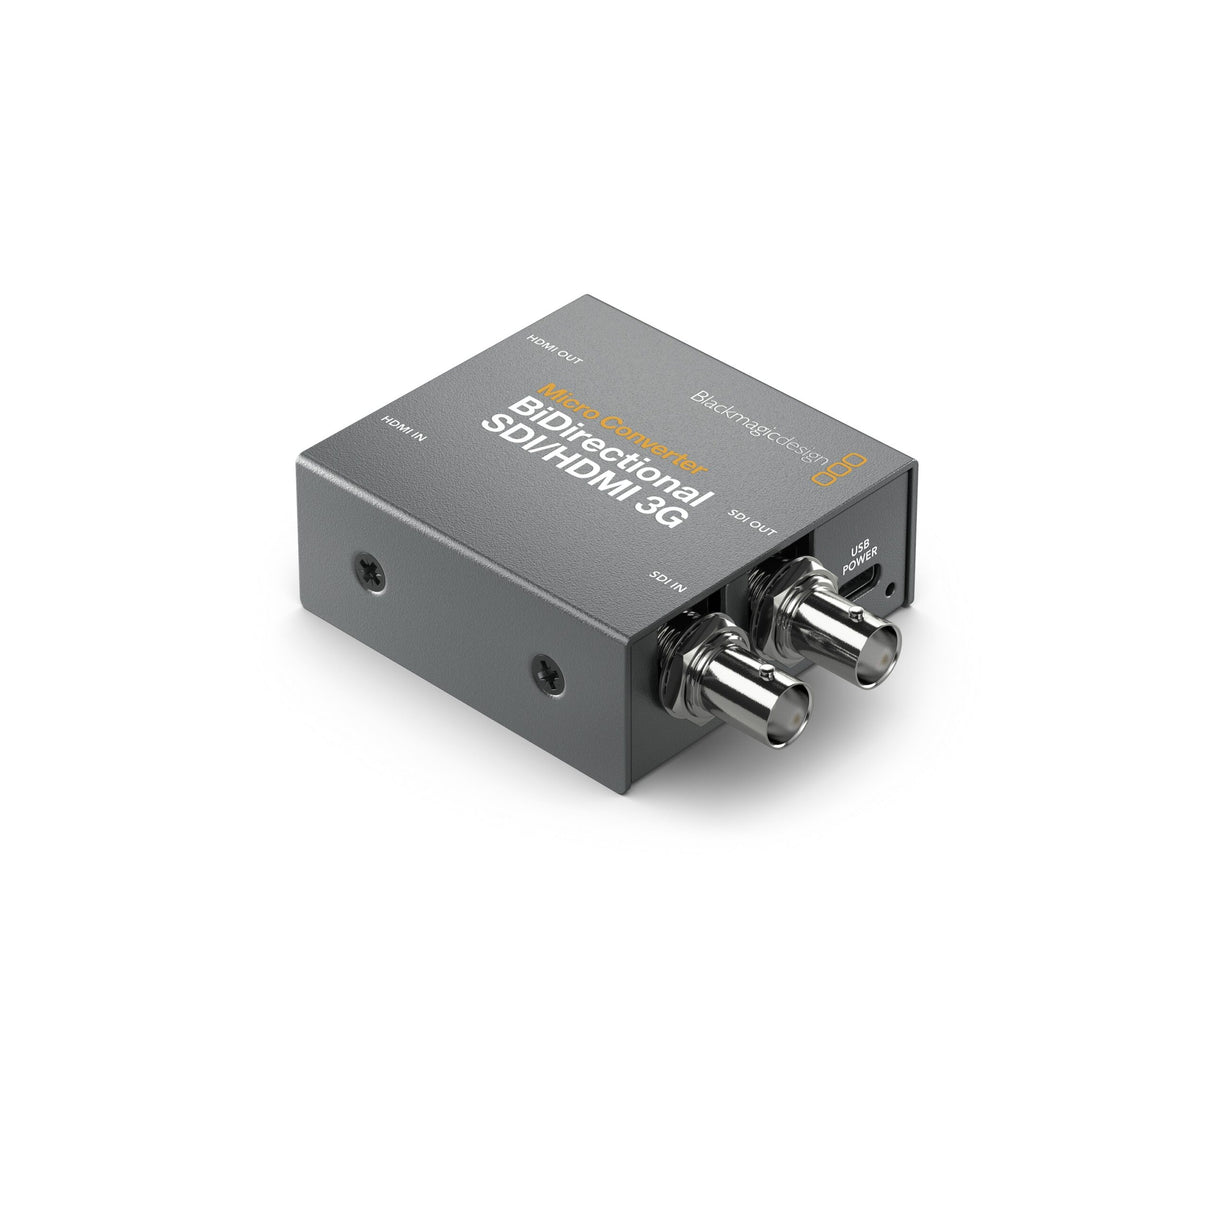 Blackmagic Design Micro Converter BiDirectional SDI/HDMI 3G with Power Supply (Used)